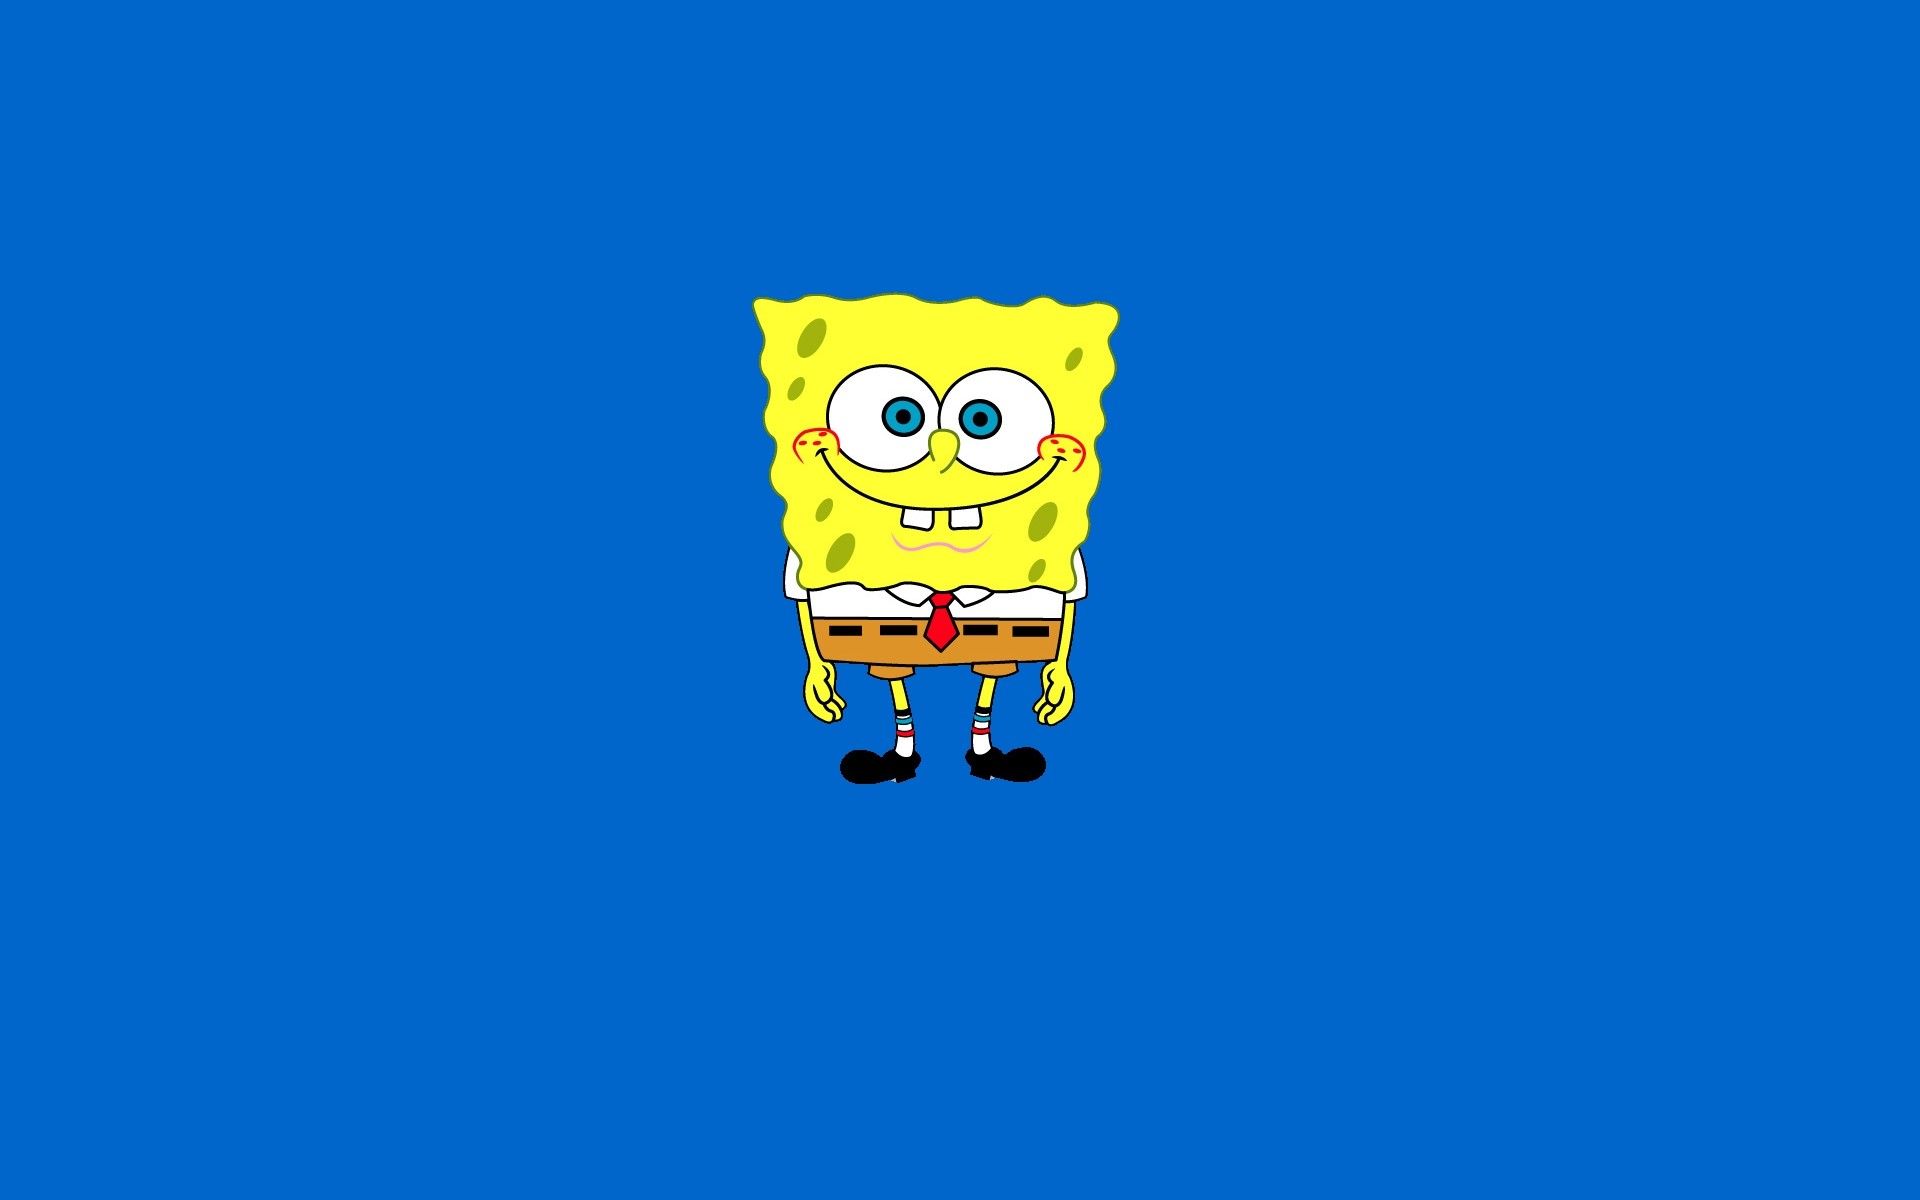 Cute SpongeBob SquarePants wallpaper download. Wallpaper, picture, photo